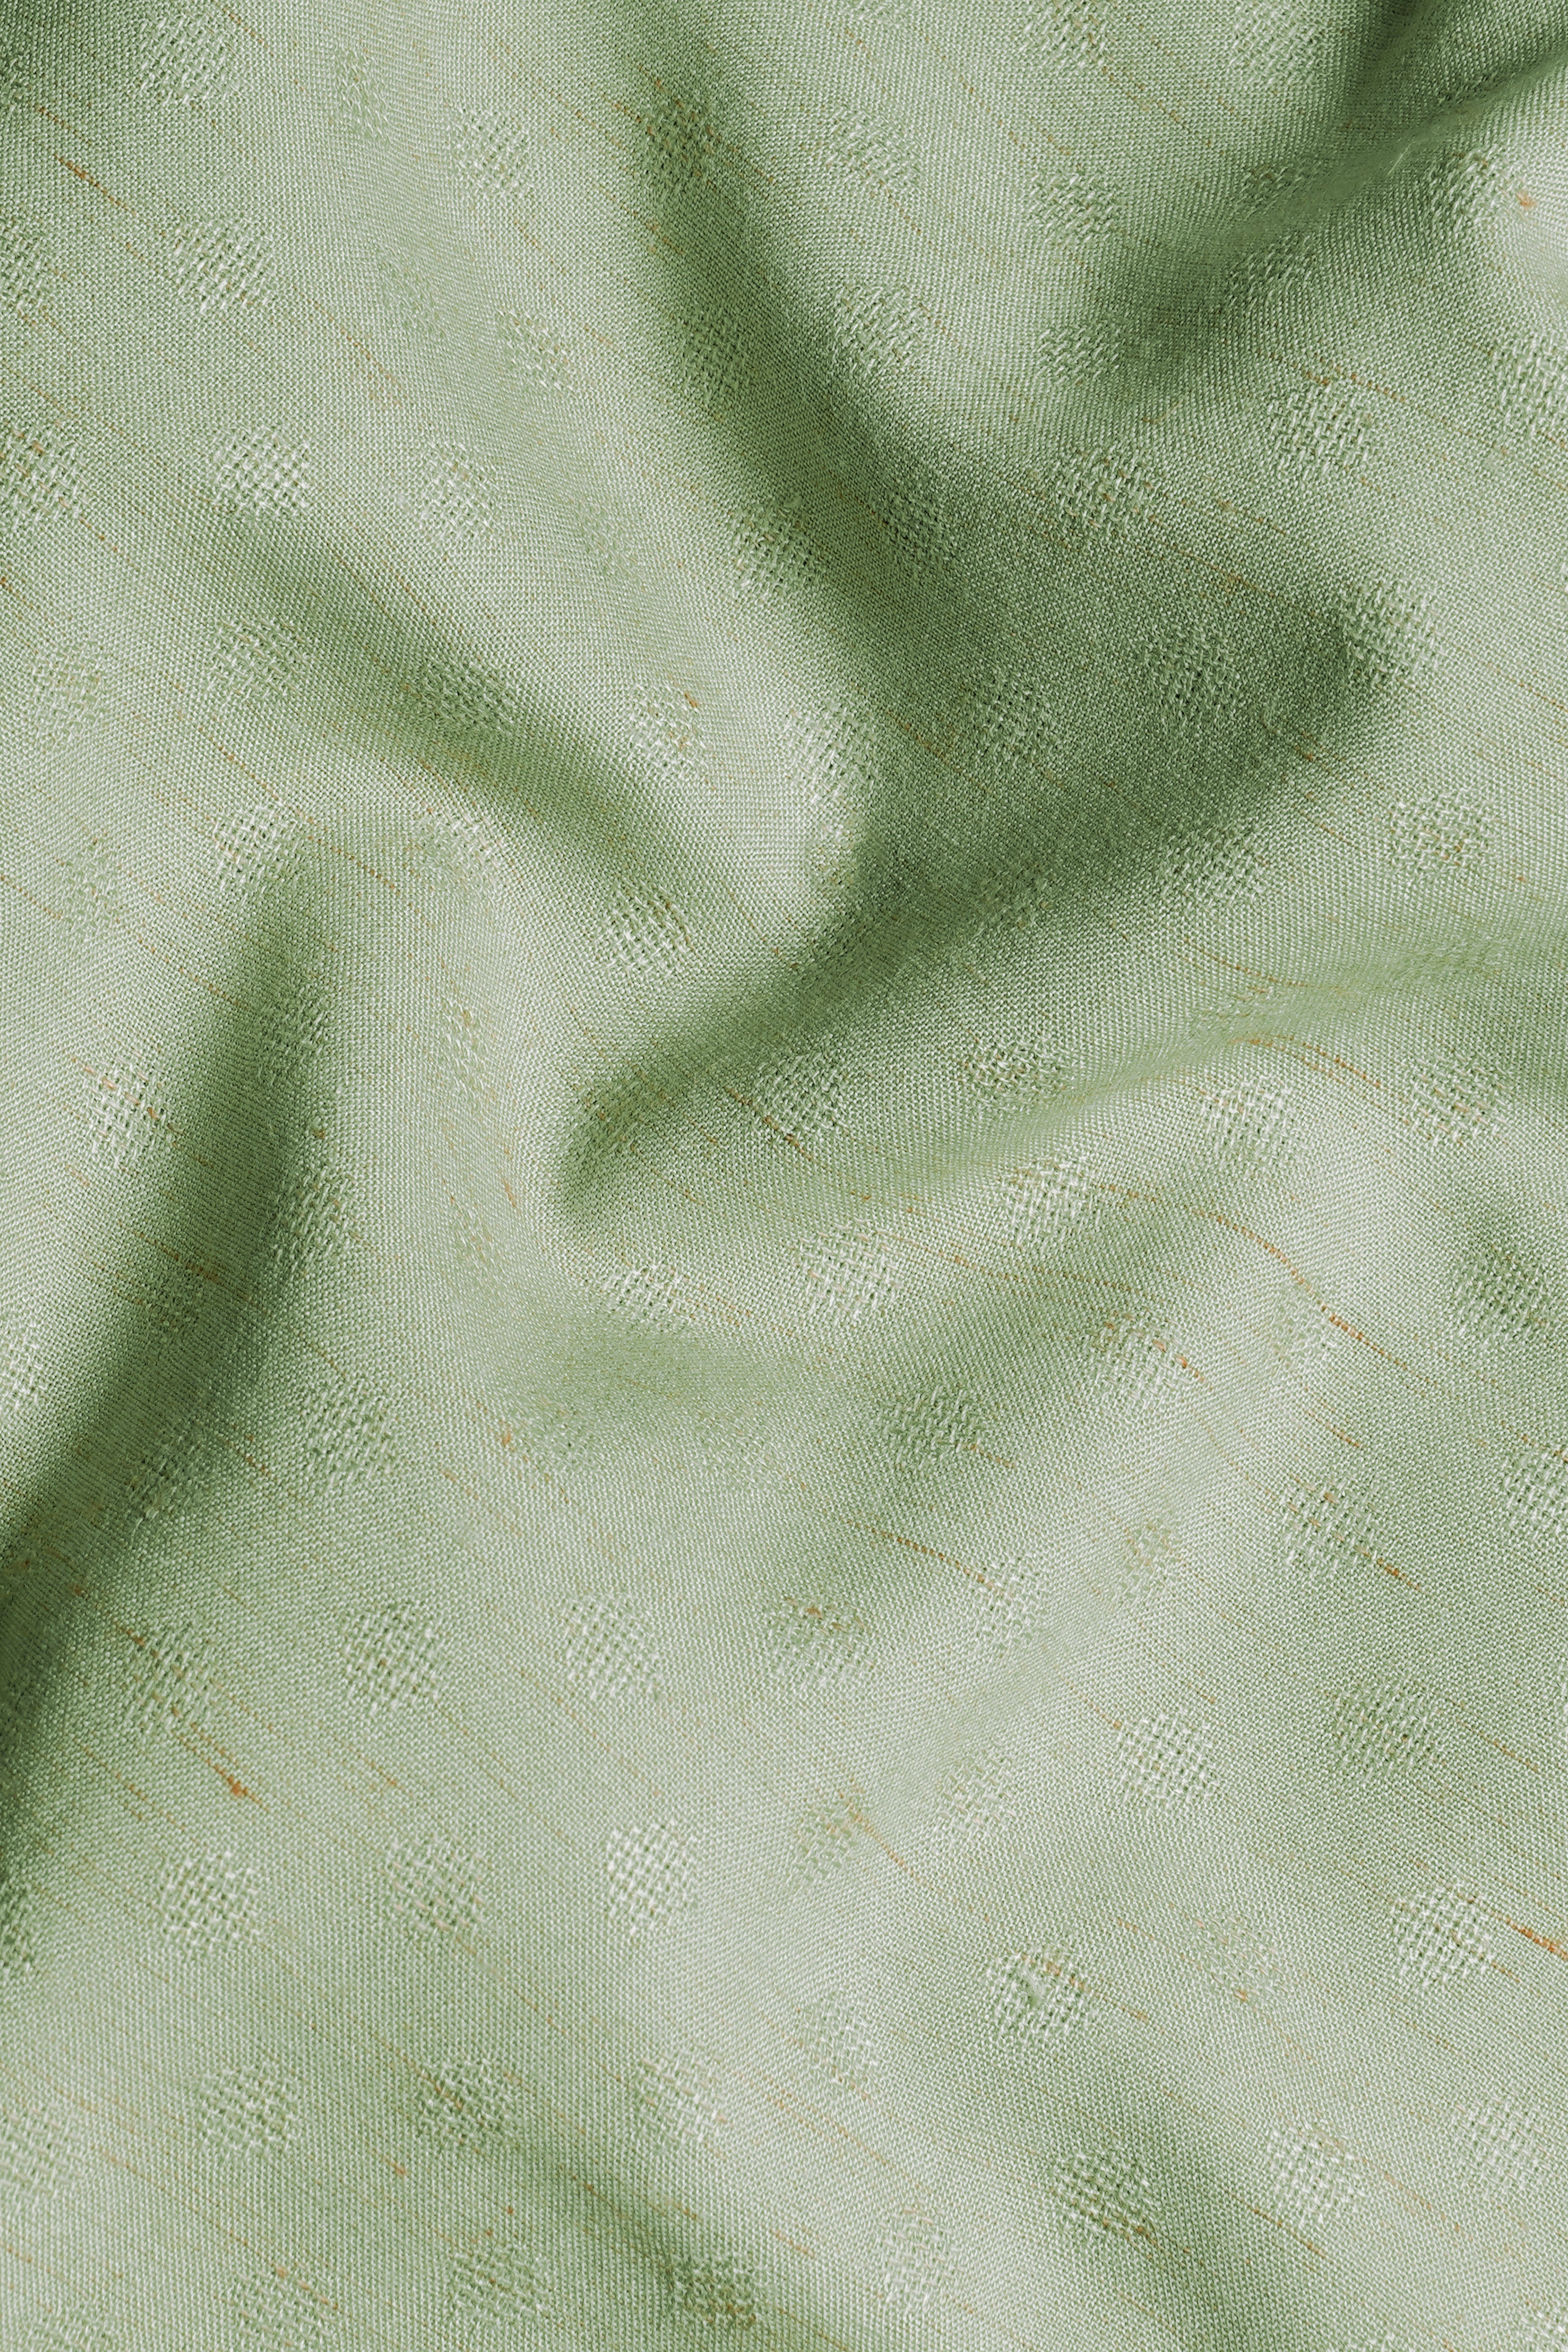 Asparagus Green Pleated Premium Cotton Crop Top